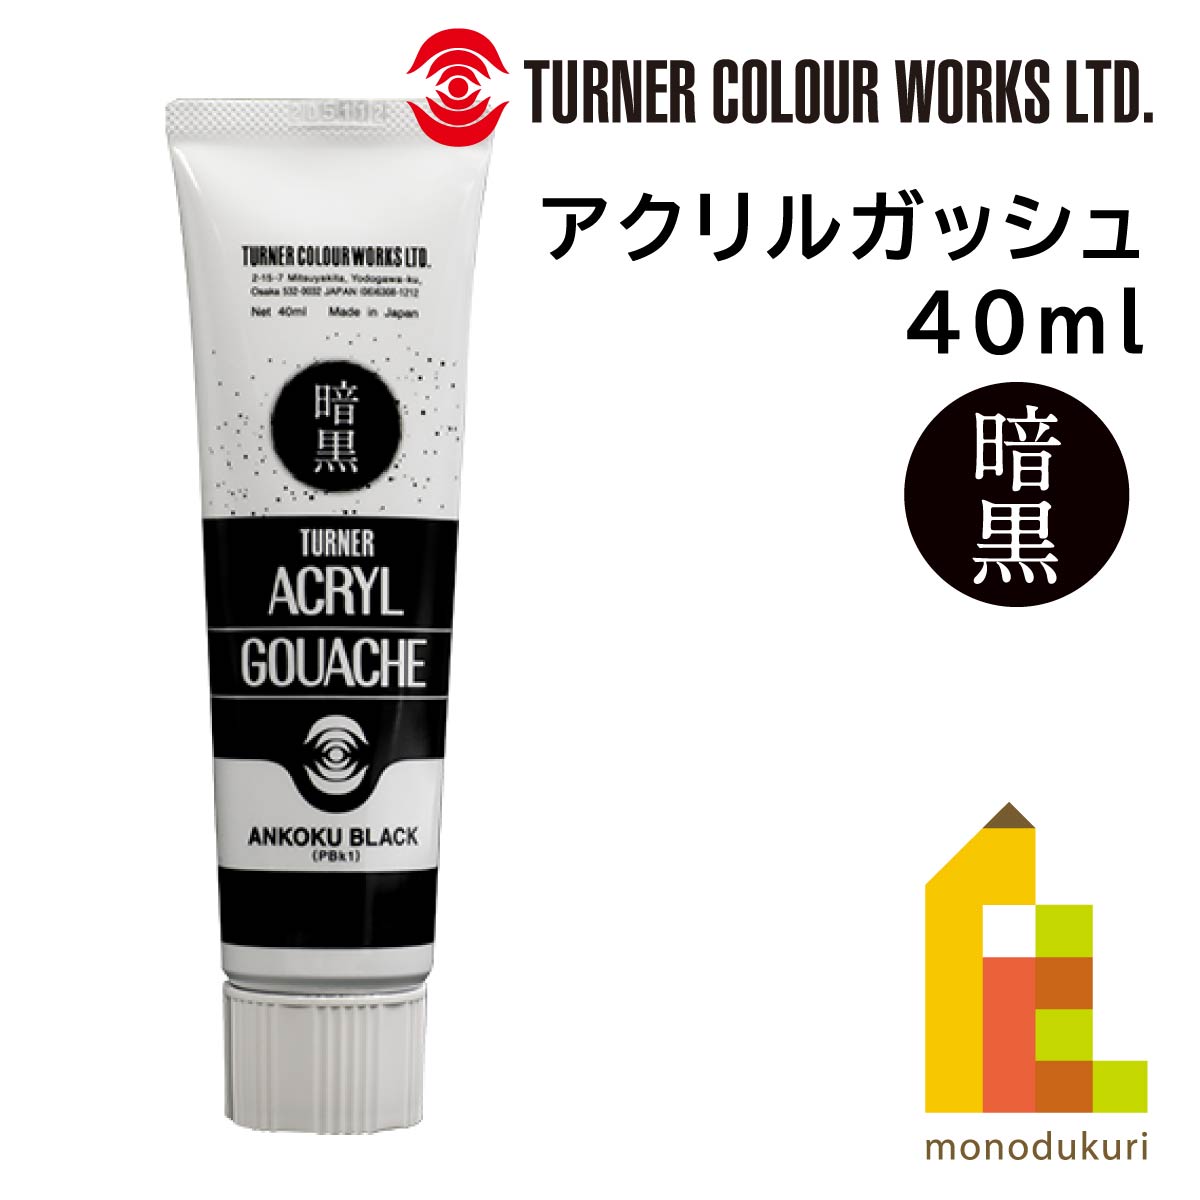  turner acrylic fiber gouache 40ml darkness black most black disappears . is seen ... black .ANKOKU BLACK dark as with deep black 